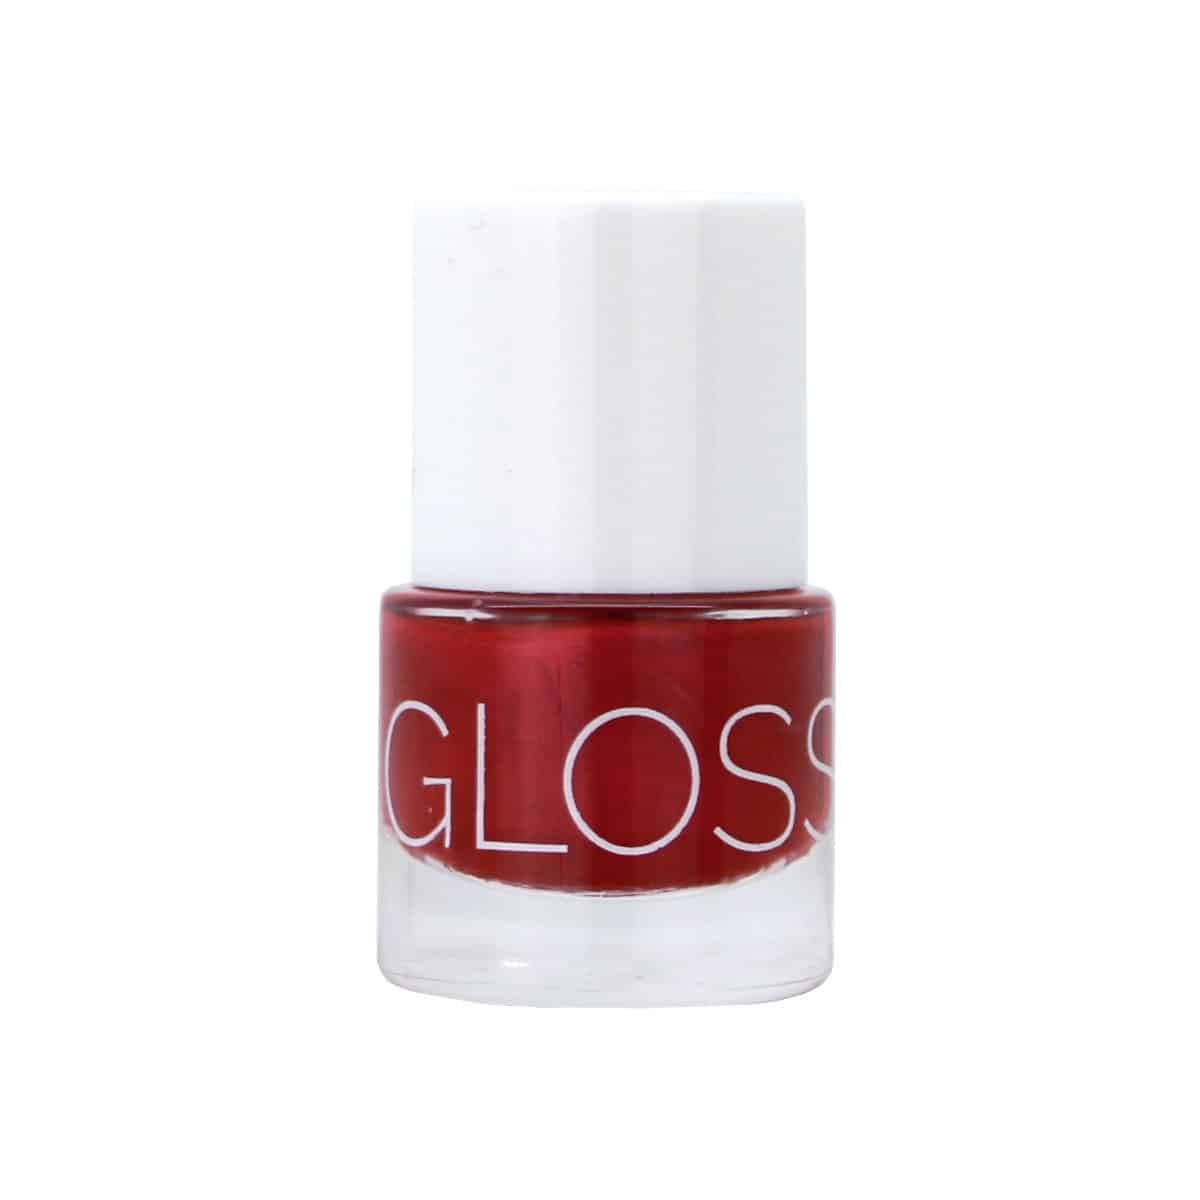 Glossworks Nagellak Ruby on Nails